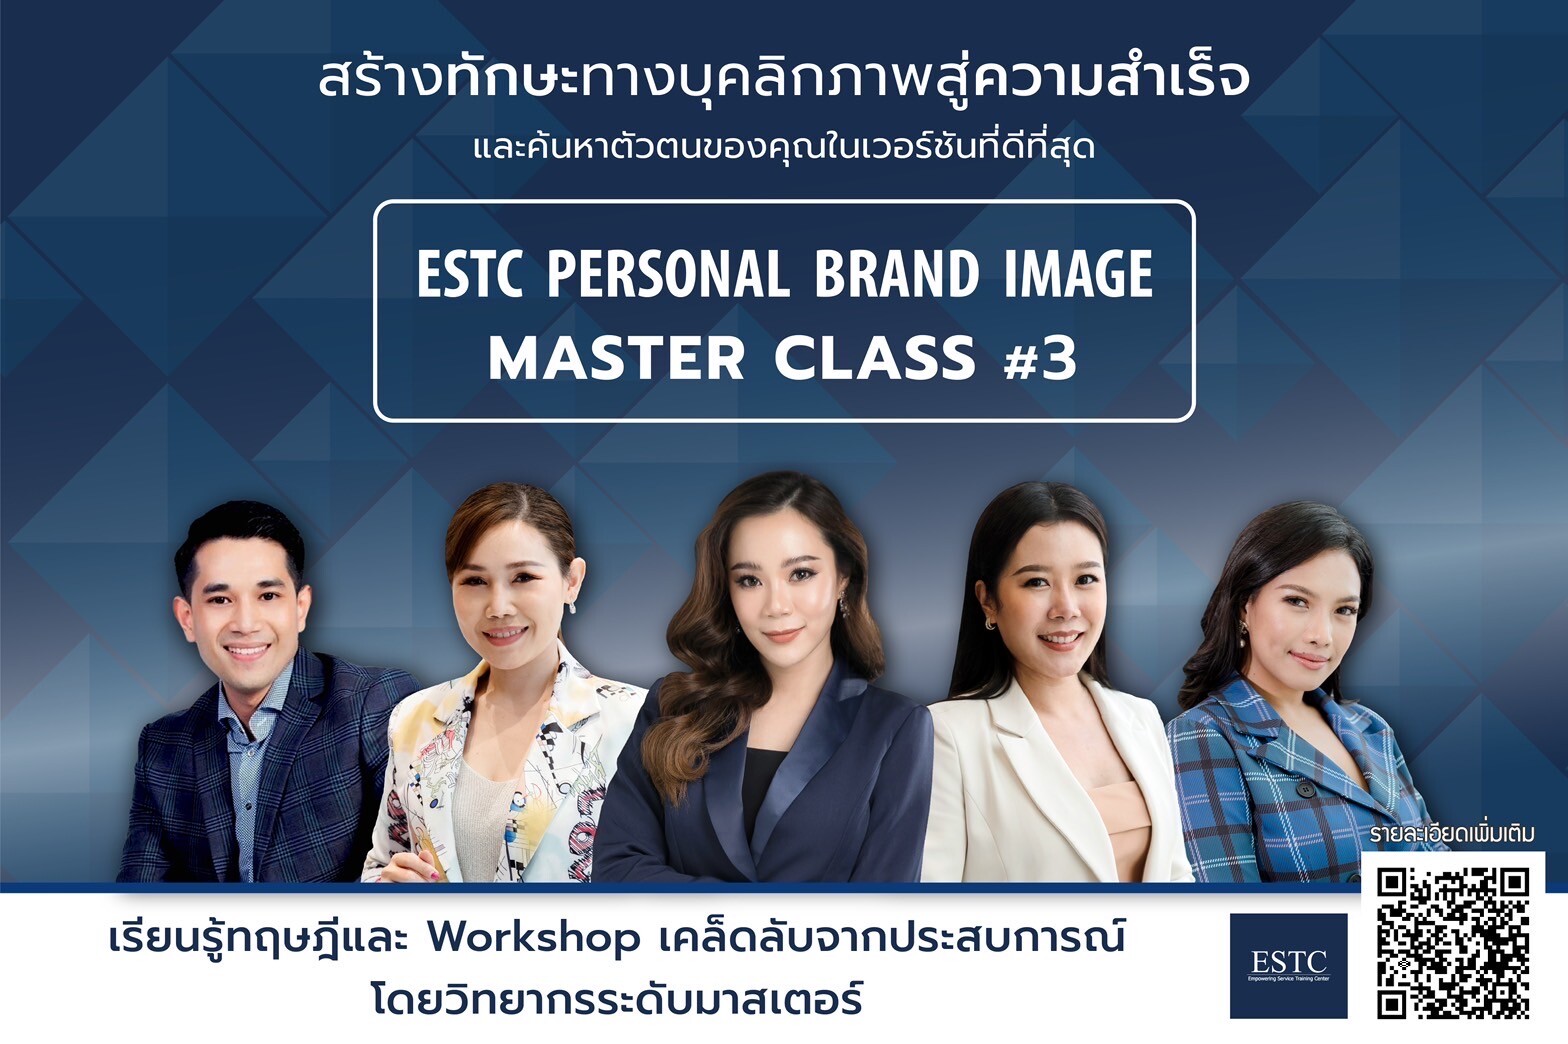 ESTC Training Center แรงเกินต้าน!! คลอดหลักสูตร "Personal Brand Image Master Class" รุ่น 3